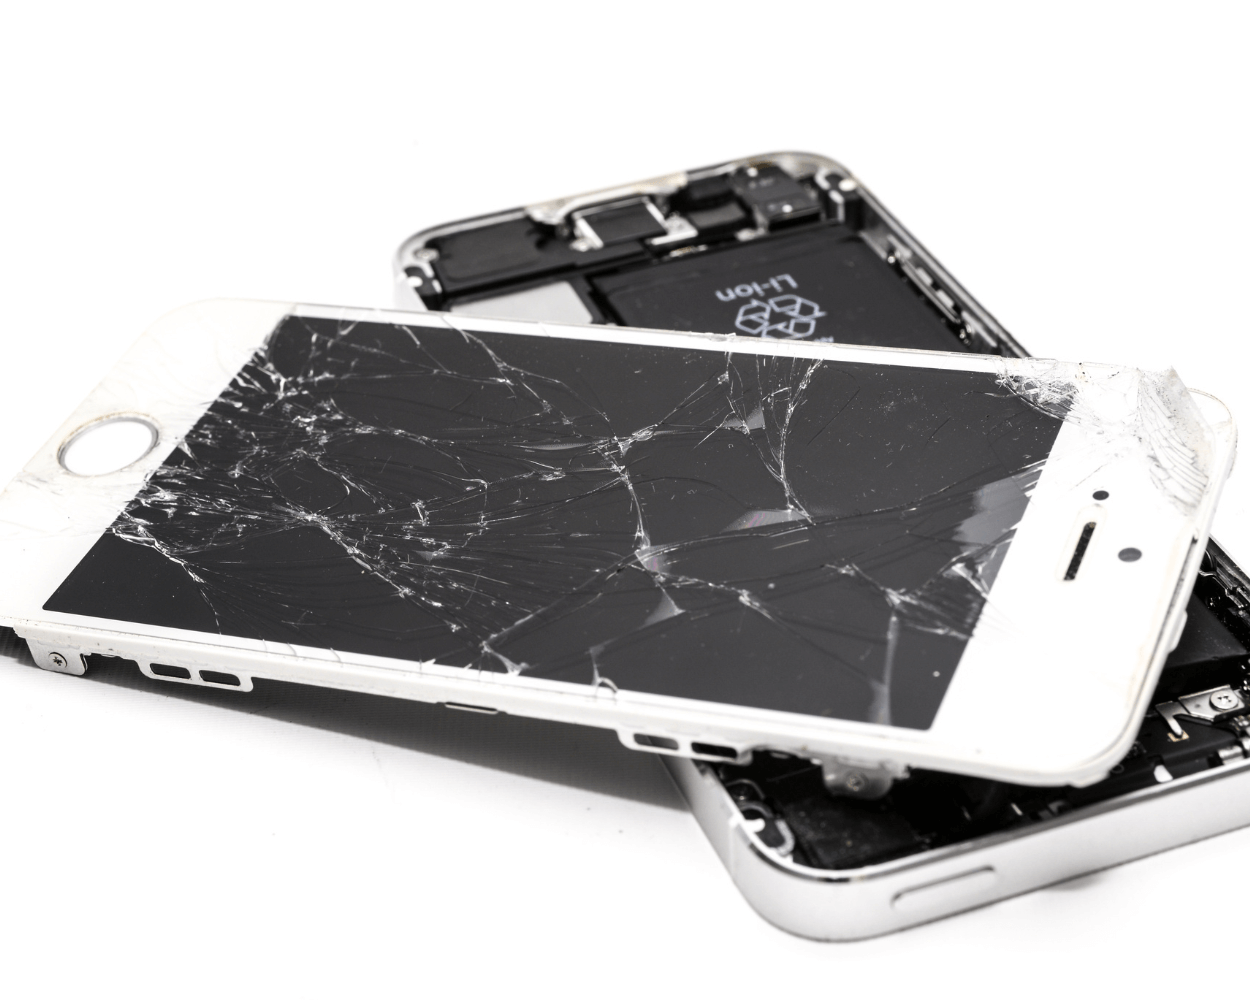 Professional iPhone Repair in Bangalore | FixCare